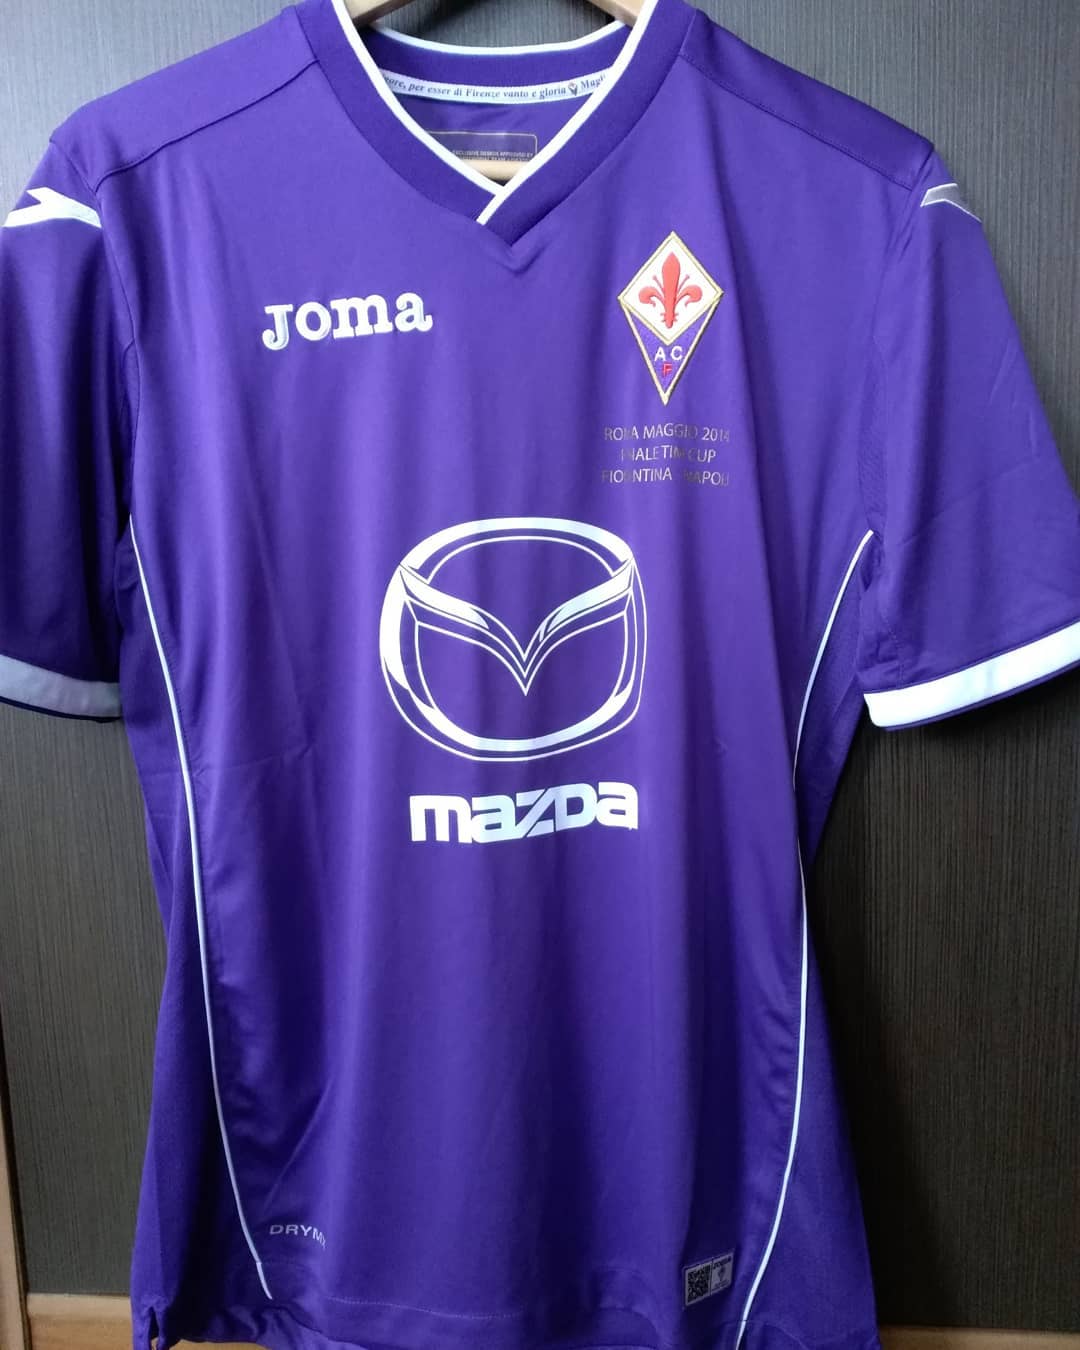 Fiorentina Home 2014 Cup Football Shirt. Club Footbal Shirts.